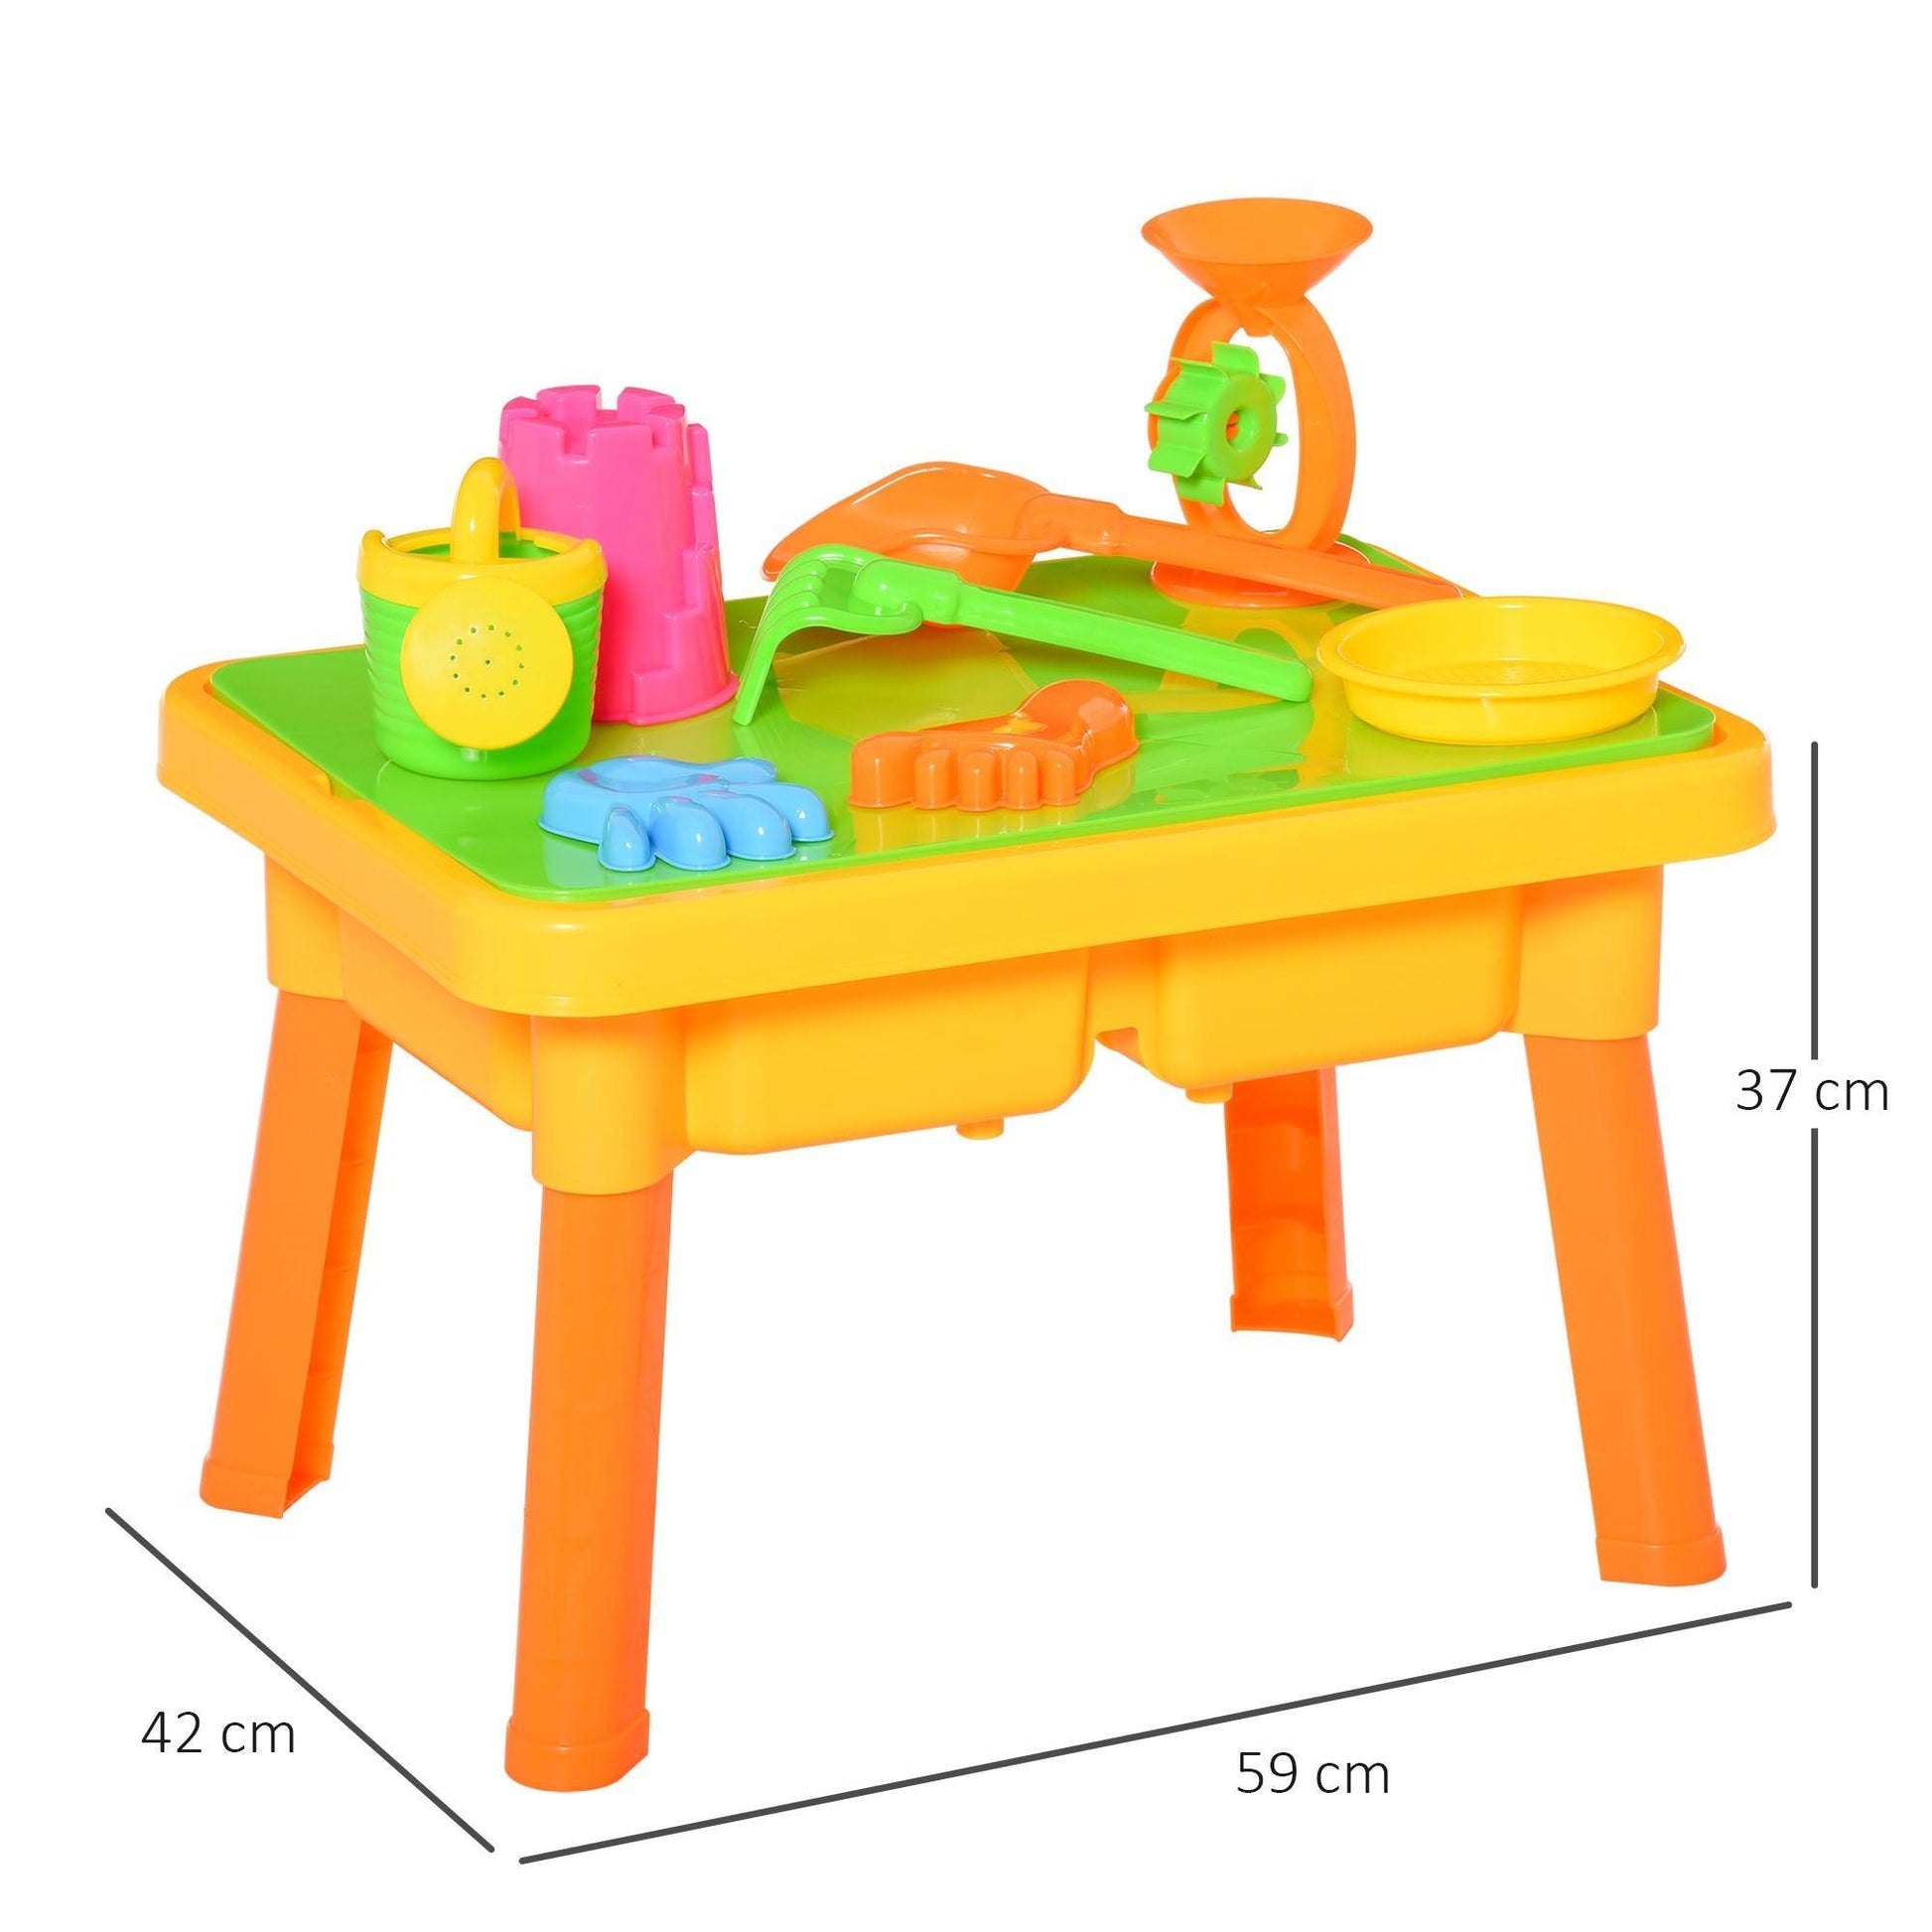 HOMCOM 2-in-1 Sand & Water Table: Fun Outdoor Set with Lid - ALL4U RETAILER LTD